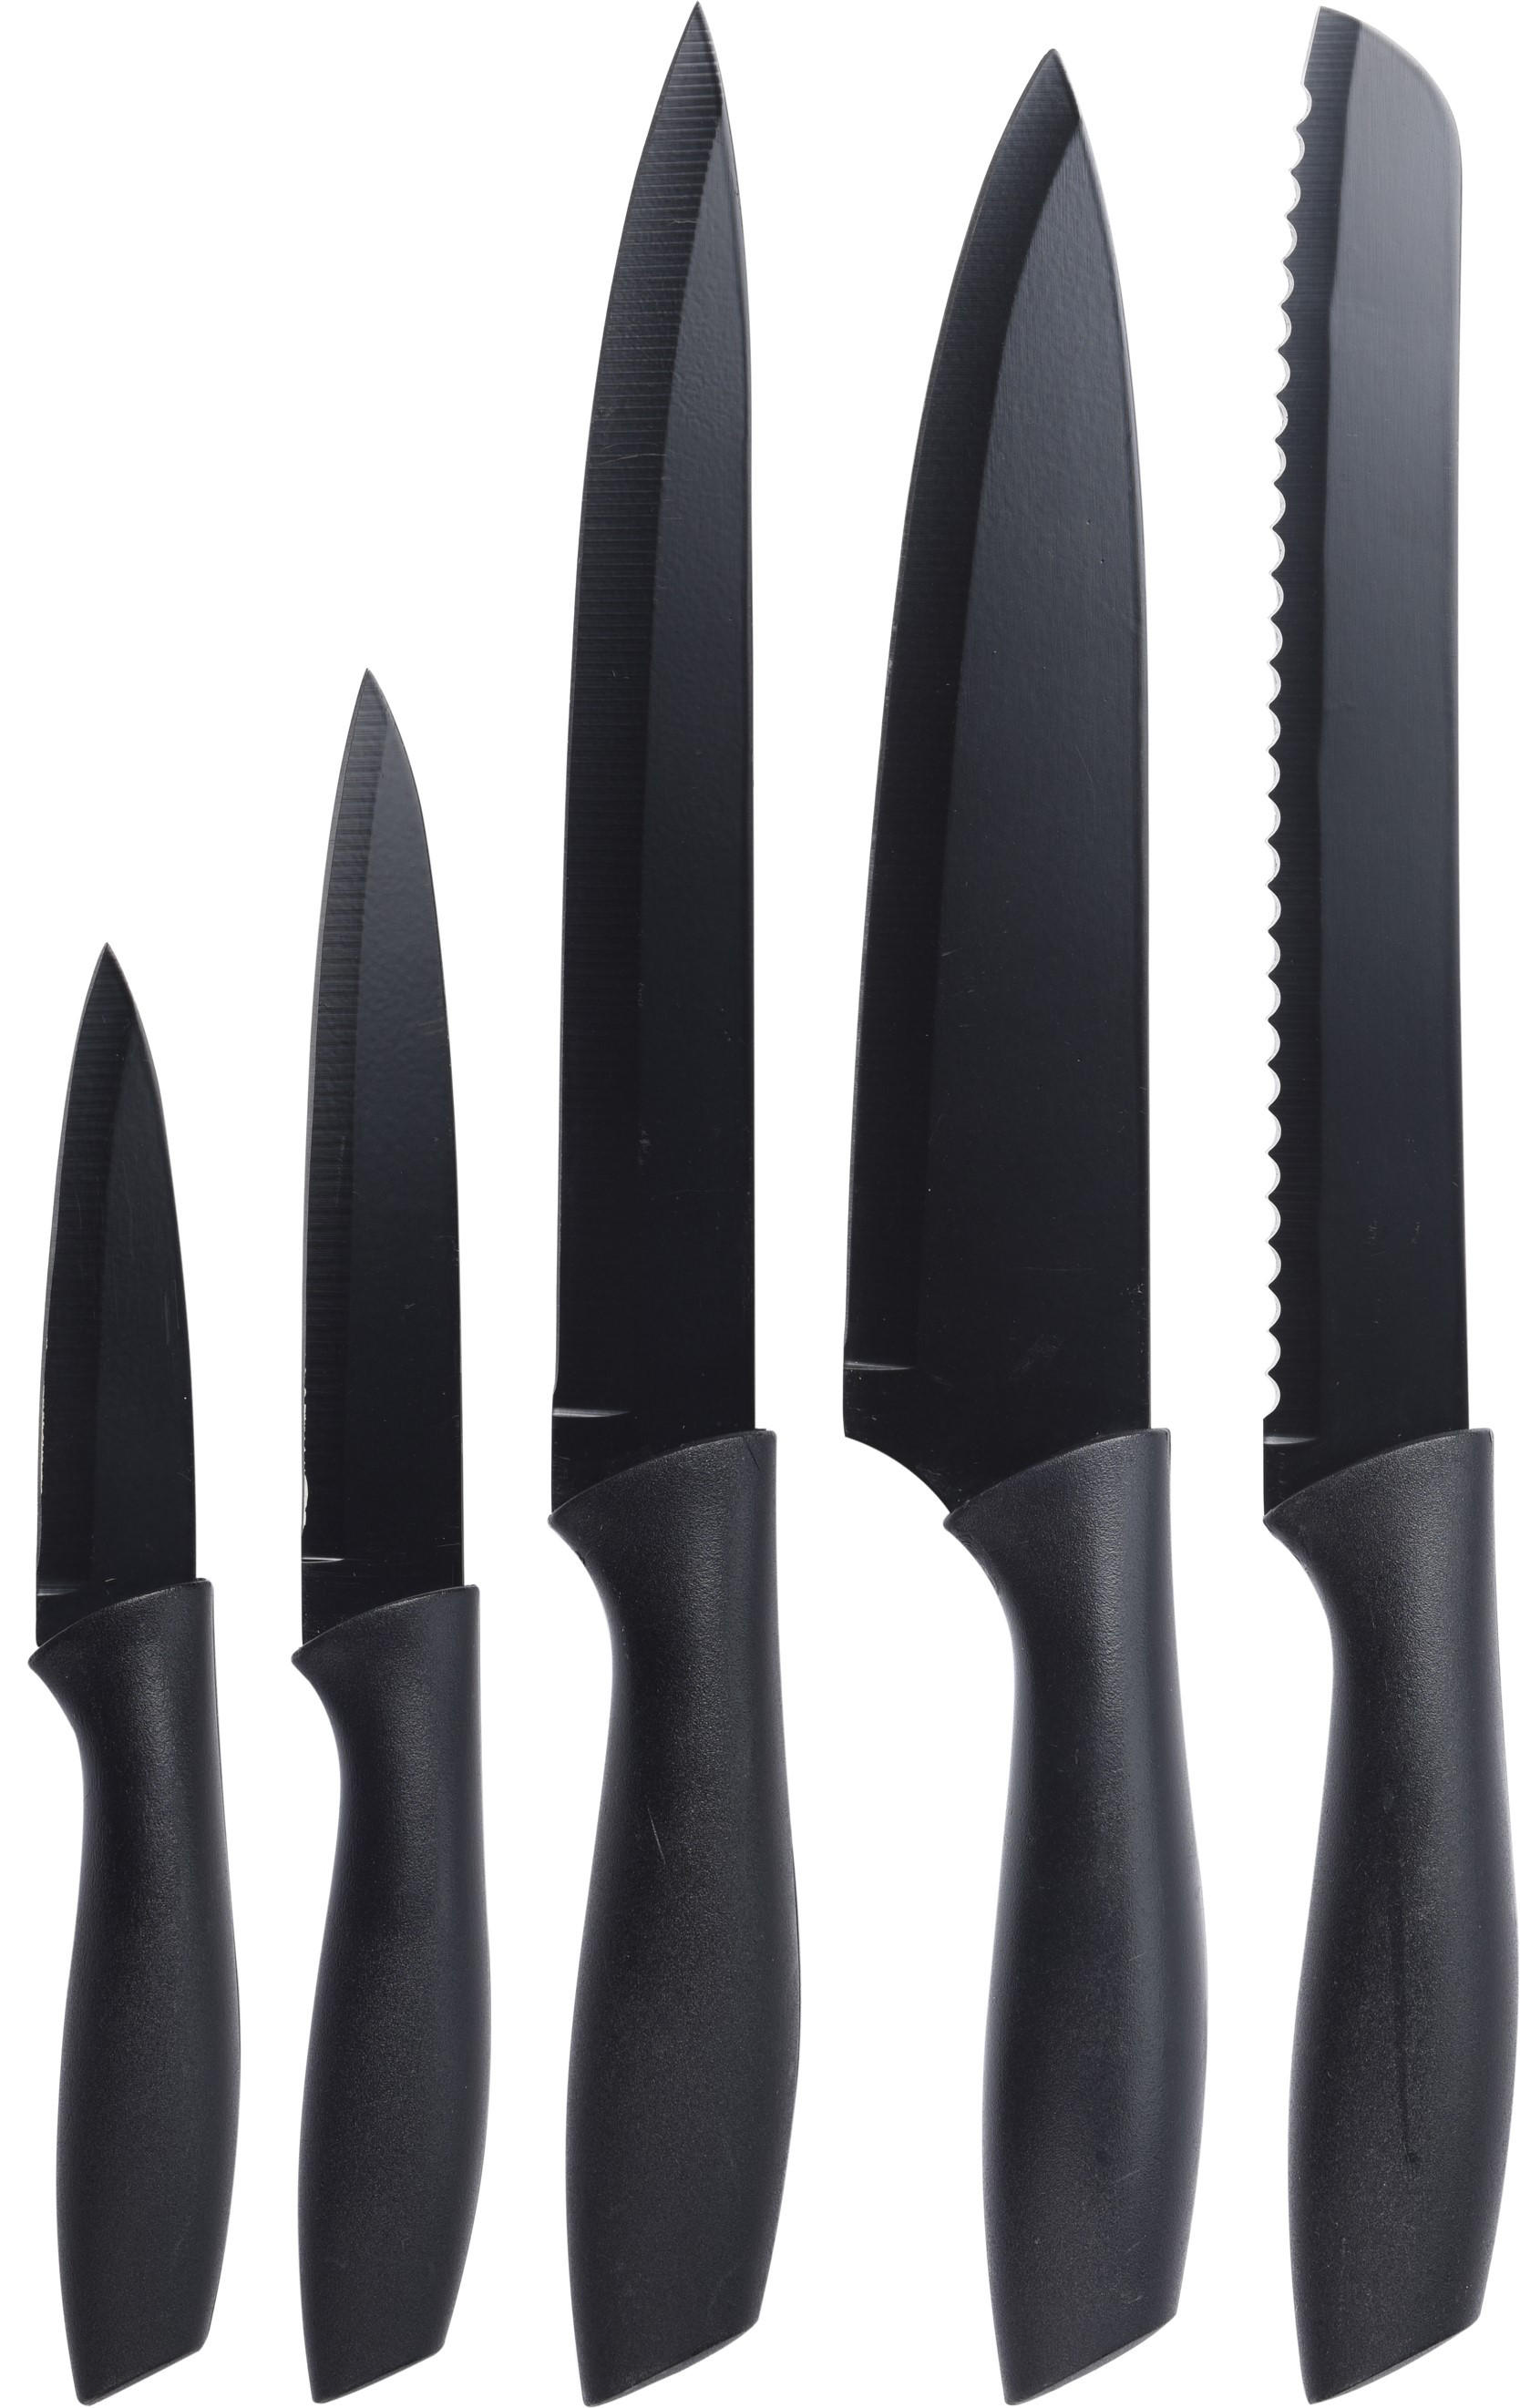 KNIVSET   - svart, Basics, metall/plast (38/35/2,6cm) - Best Price